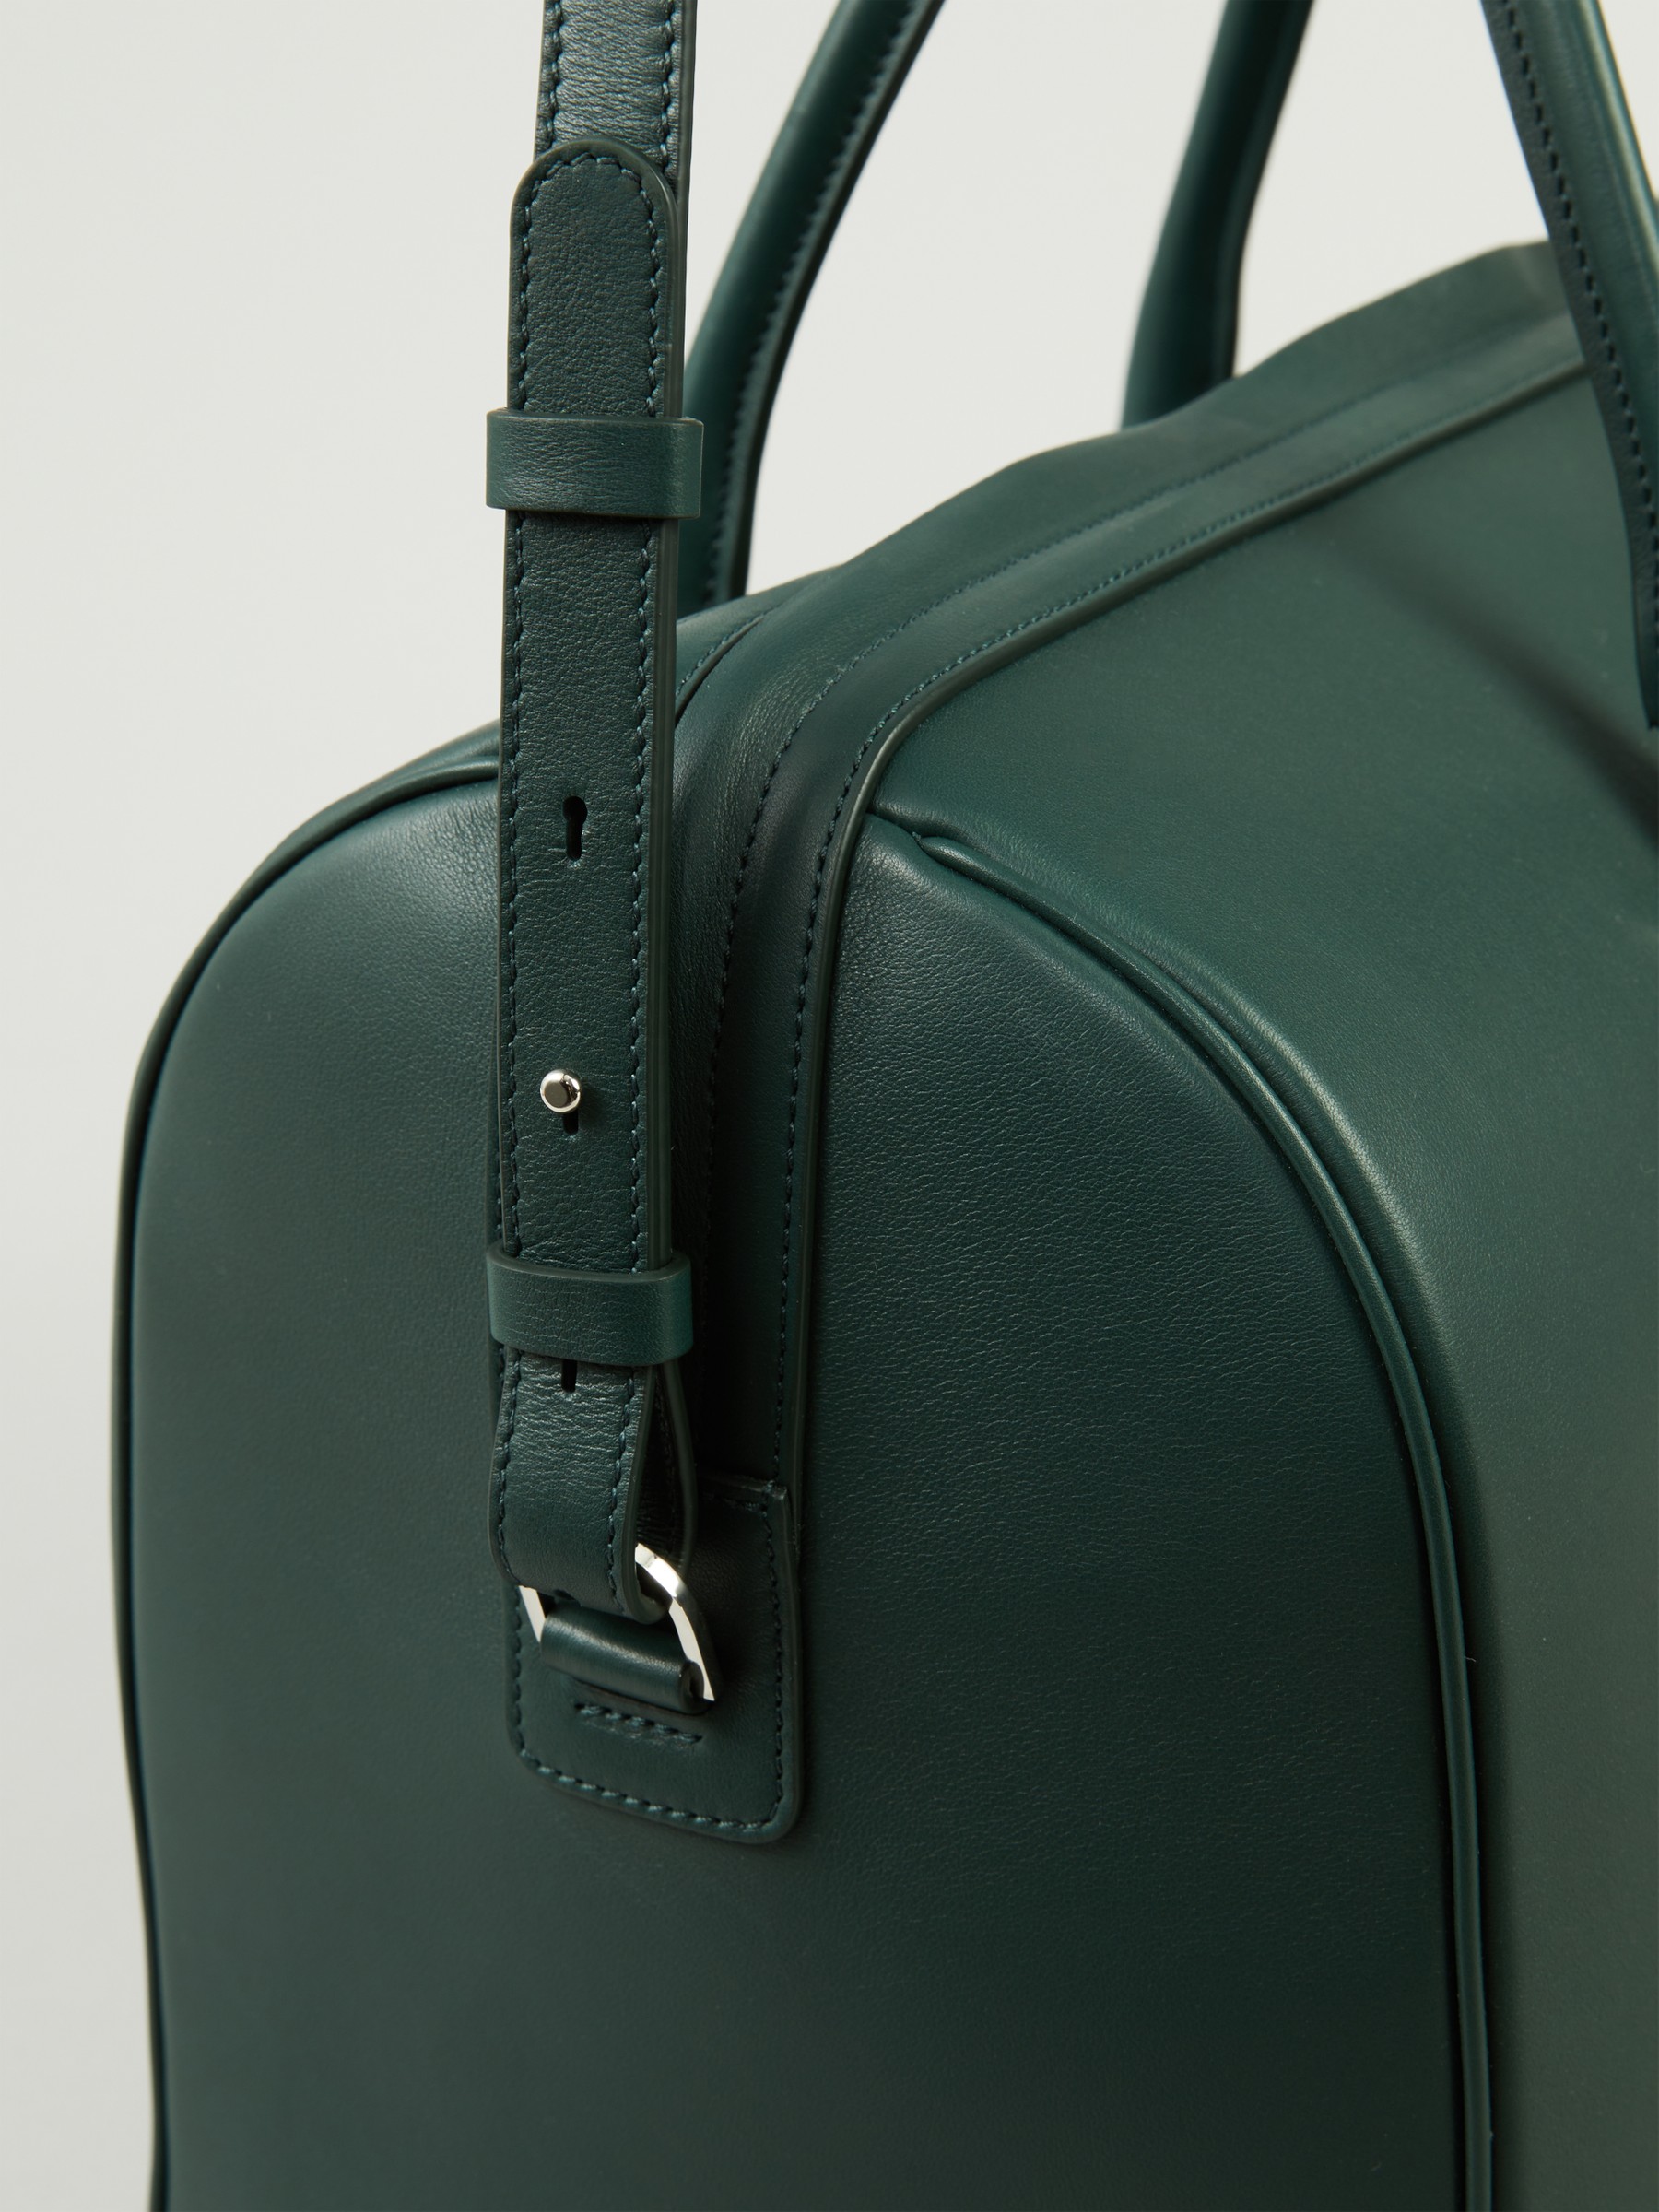 The Row Travel bag 'Iowa' Green | Handbags